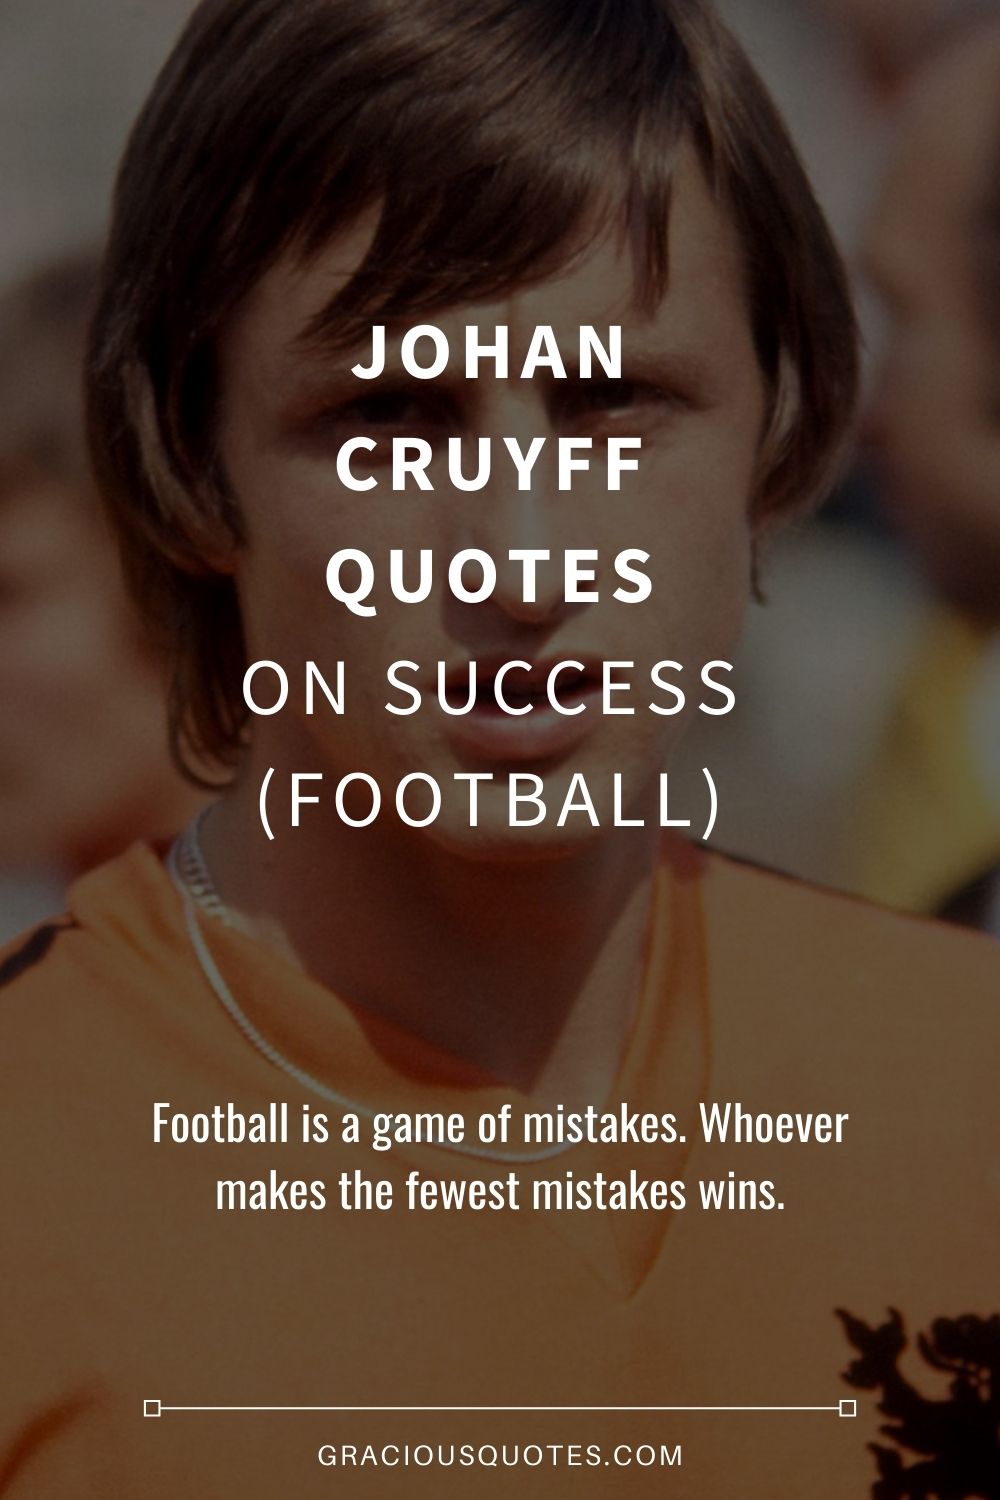 Johan Cruyff Quotes on Success (FOOTBALL) - Gracious Quotes